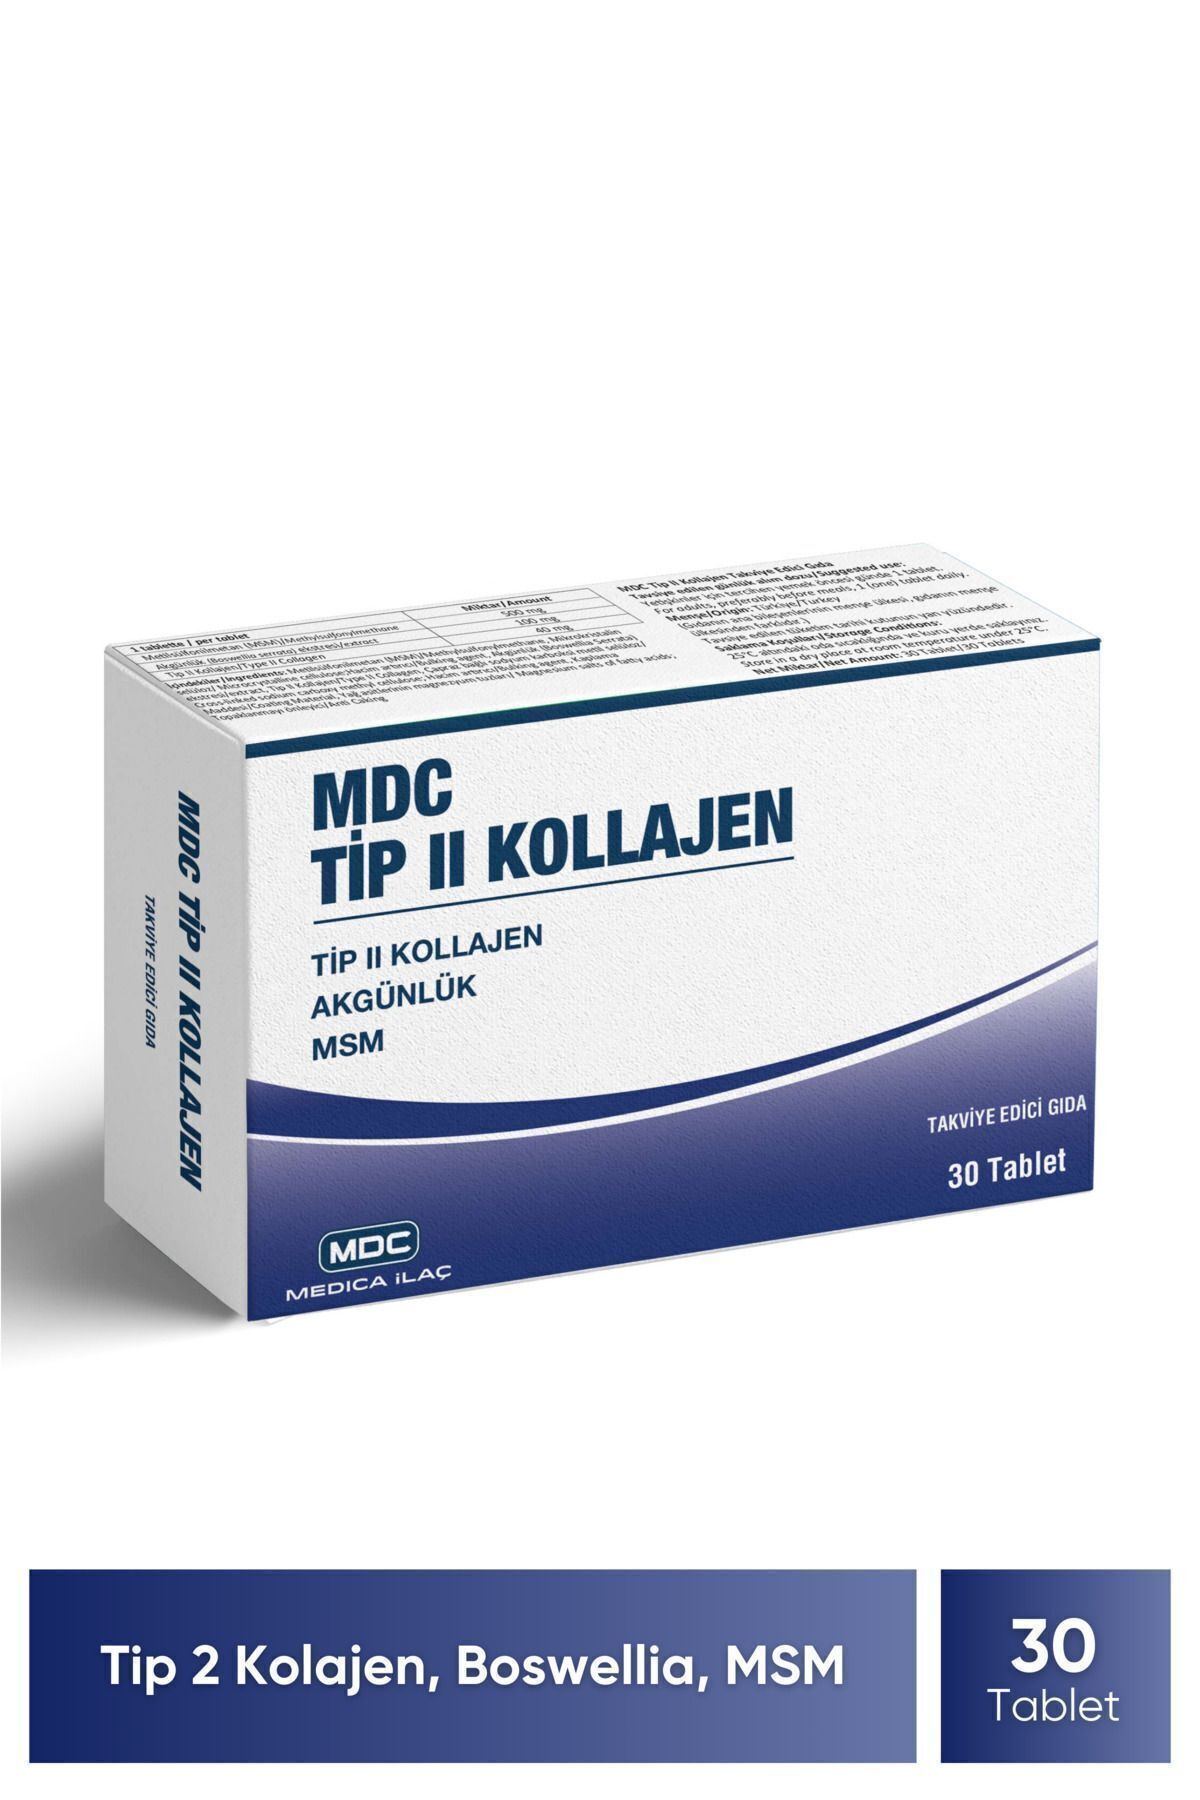 MDC Tip 2 Kolajen 30 Tablet (TİP 2 KOLAJEN, MSM, AKGÜNLÜK)